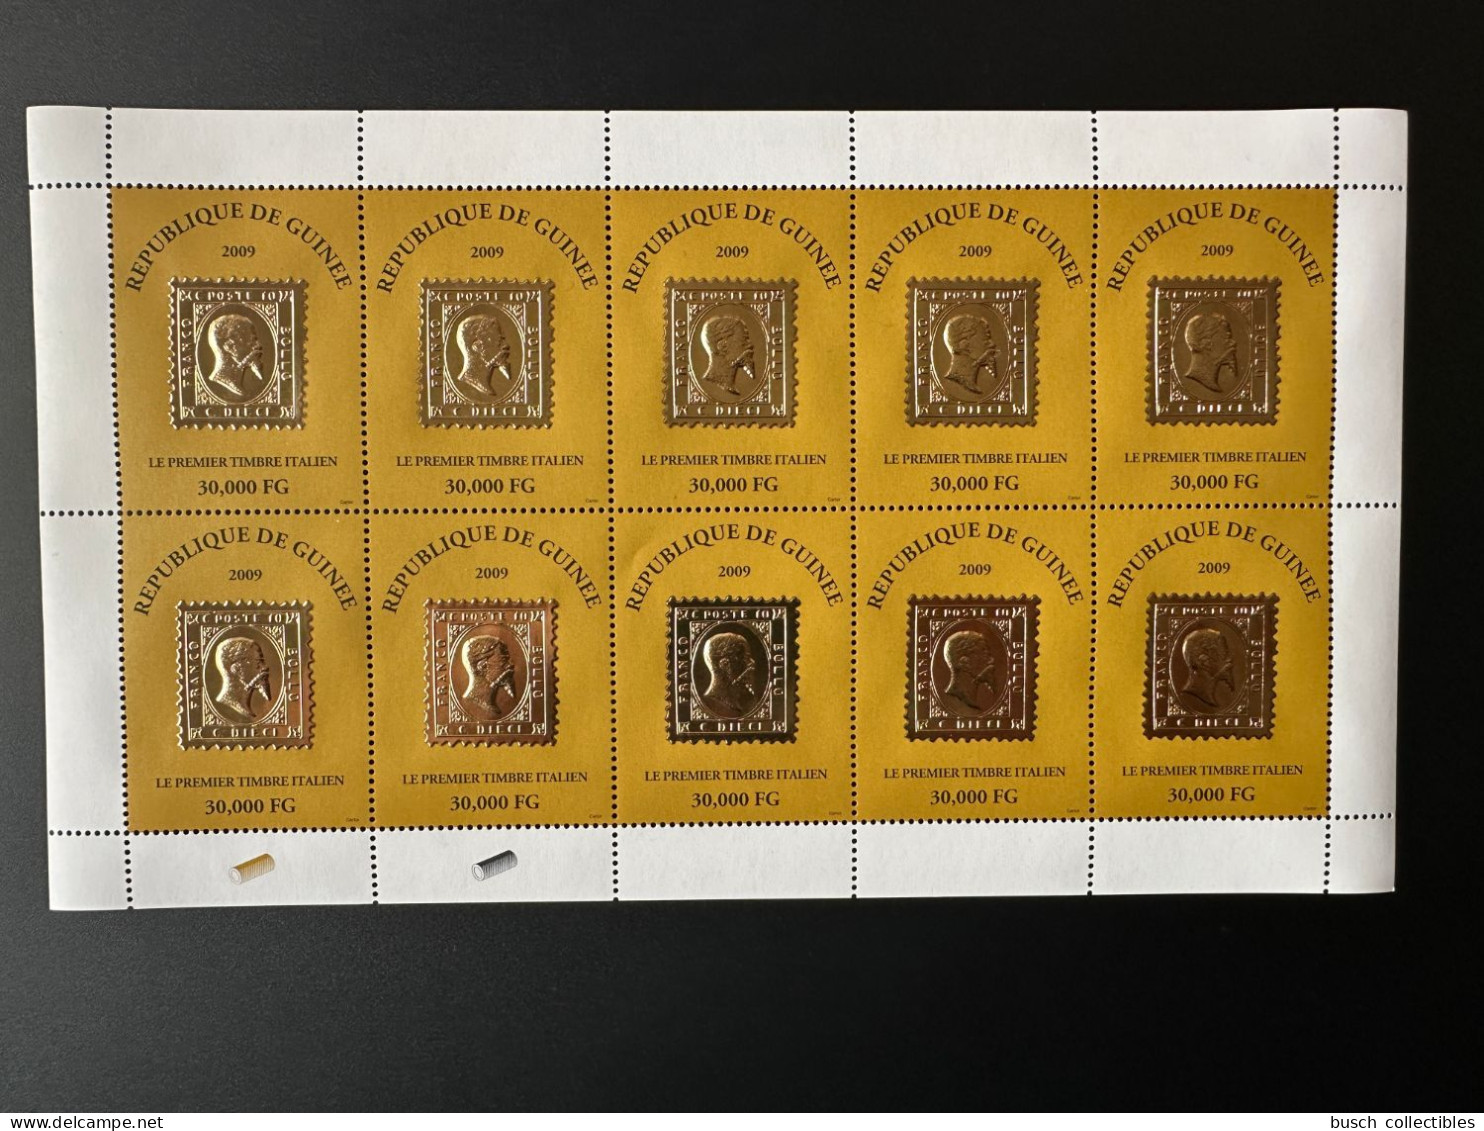 Guinée Guinea 2009 Mi. 6488 Feuillet Kleinbogen Premier Timbre Italien First Italian Stamp On Stamp Gold Or Francobollo - Guinea (1958-...)